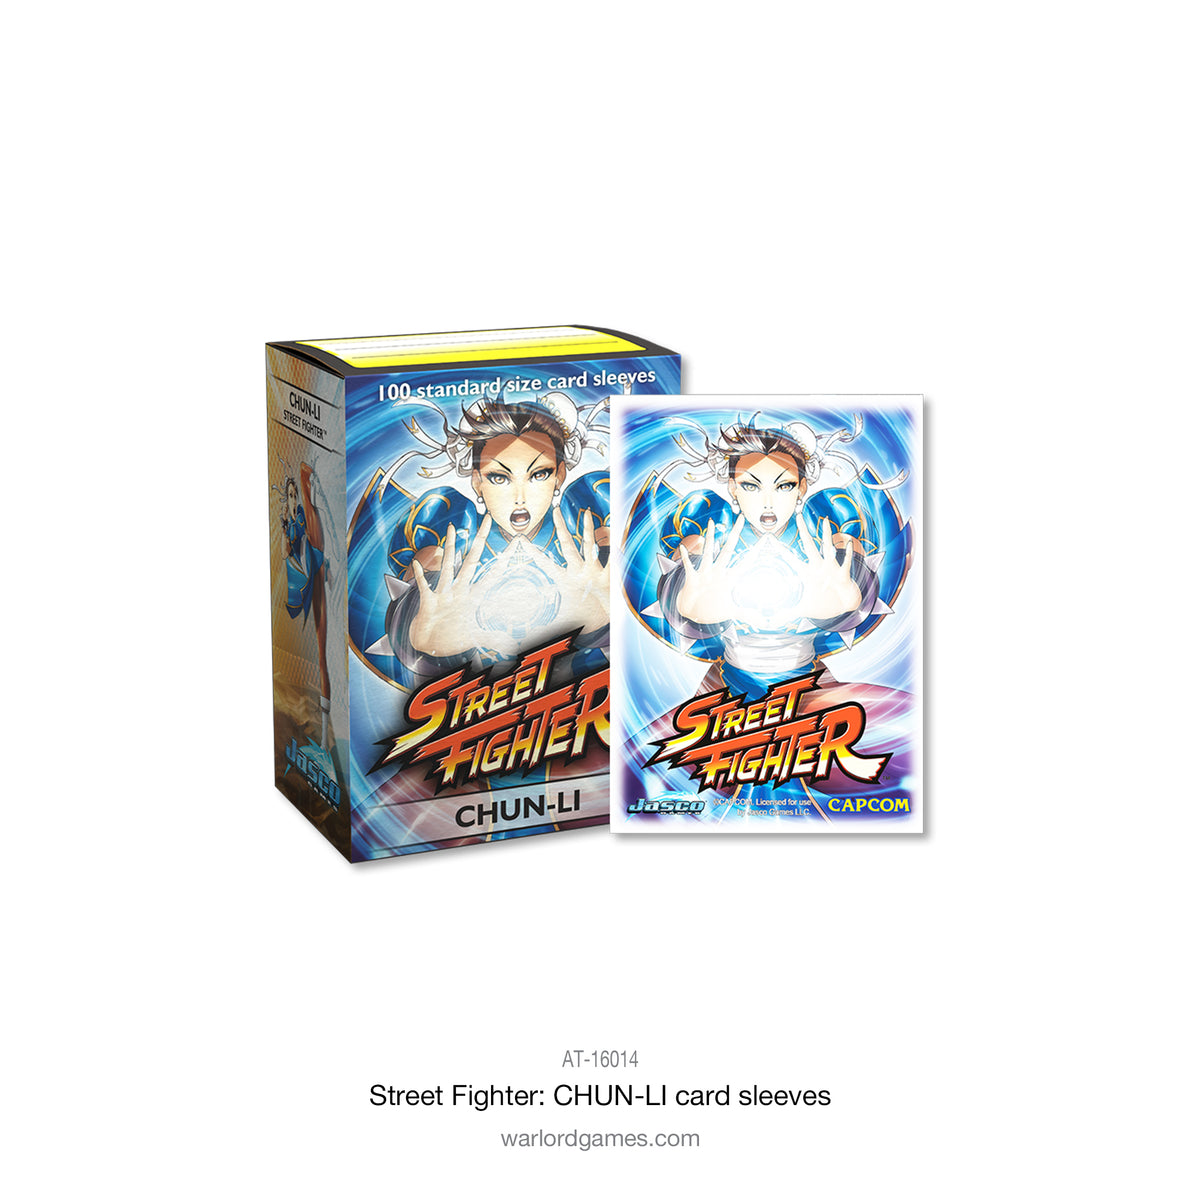 Street Fighter: Chun-Li card sleeves